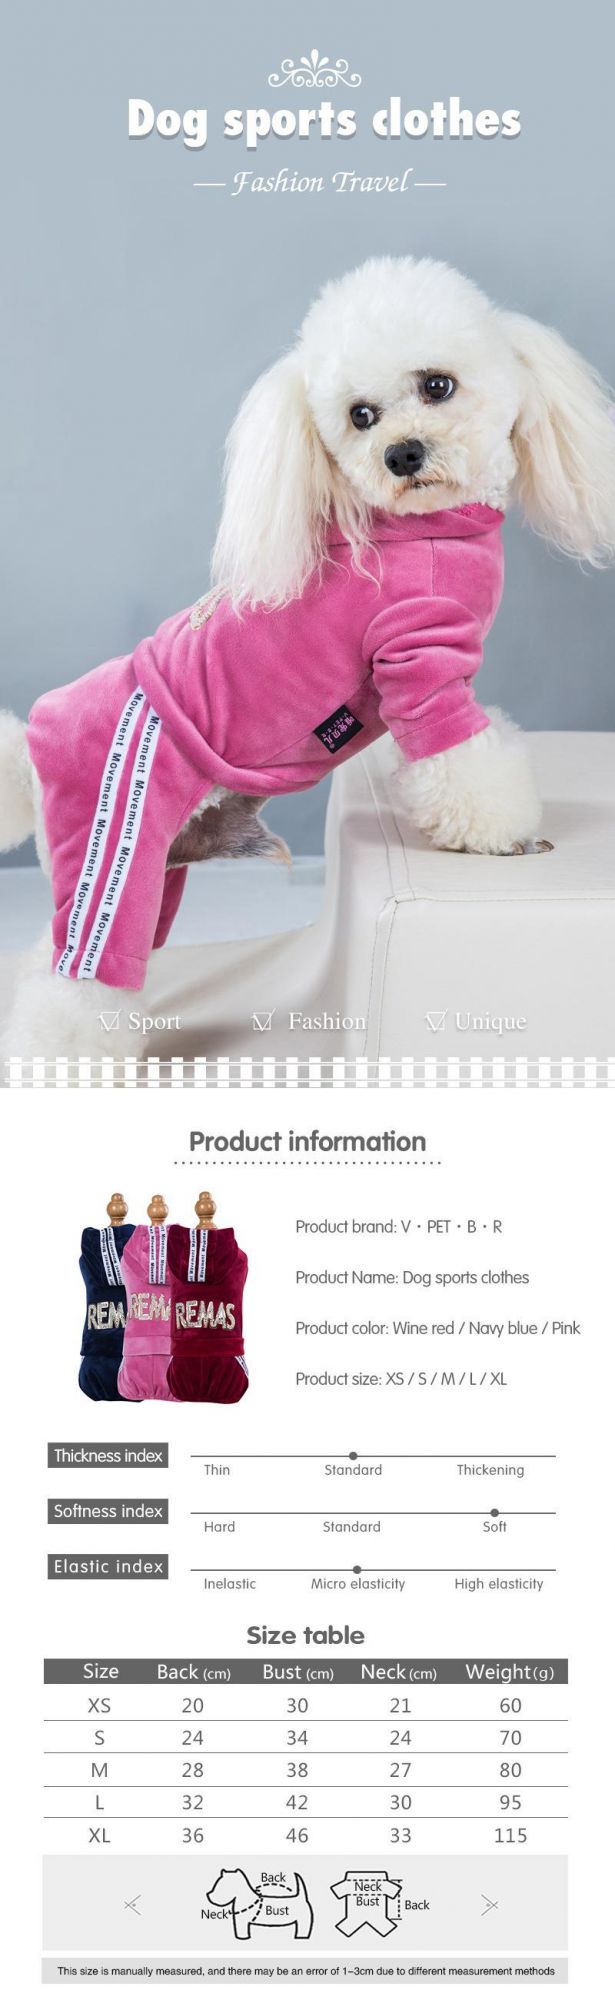 Adjustable Pet Jacket Outdoor Multi-Functional Reflective Dog Coat